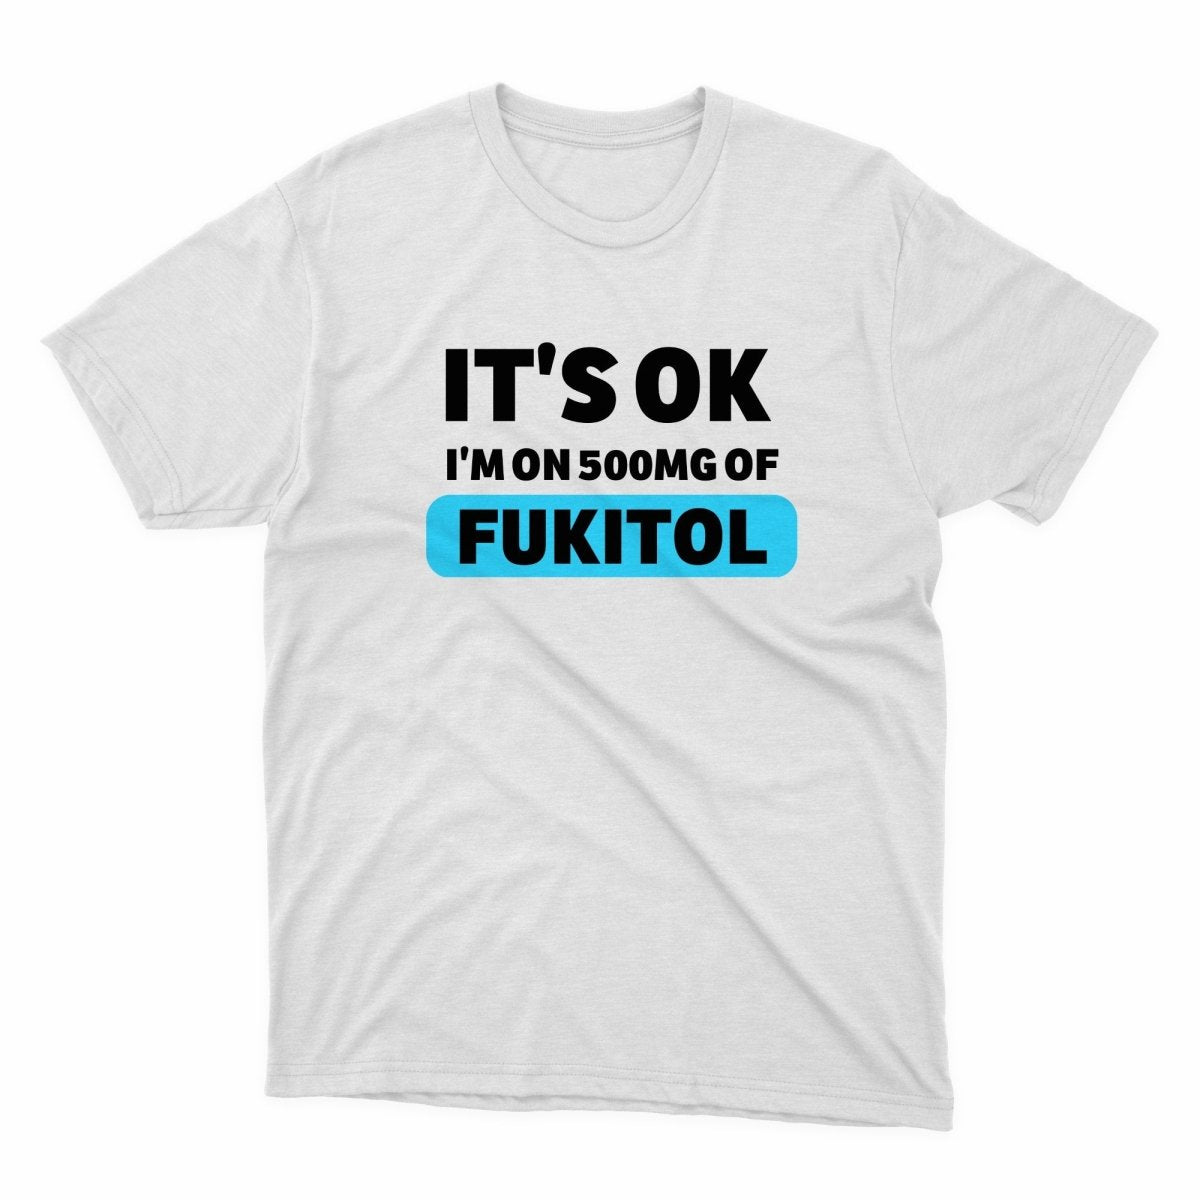 It's Ok I'm On 500mg Of Fukitol Shirt - stickerbullIt's Ok I'm On 500mg Of Fukitol ShirtShirtsPrintifystickerbull17551810428679497099WhiteSa white t - shirt that says it's ok i'm on 500